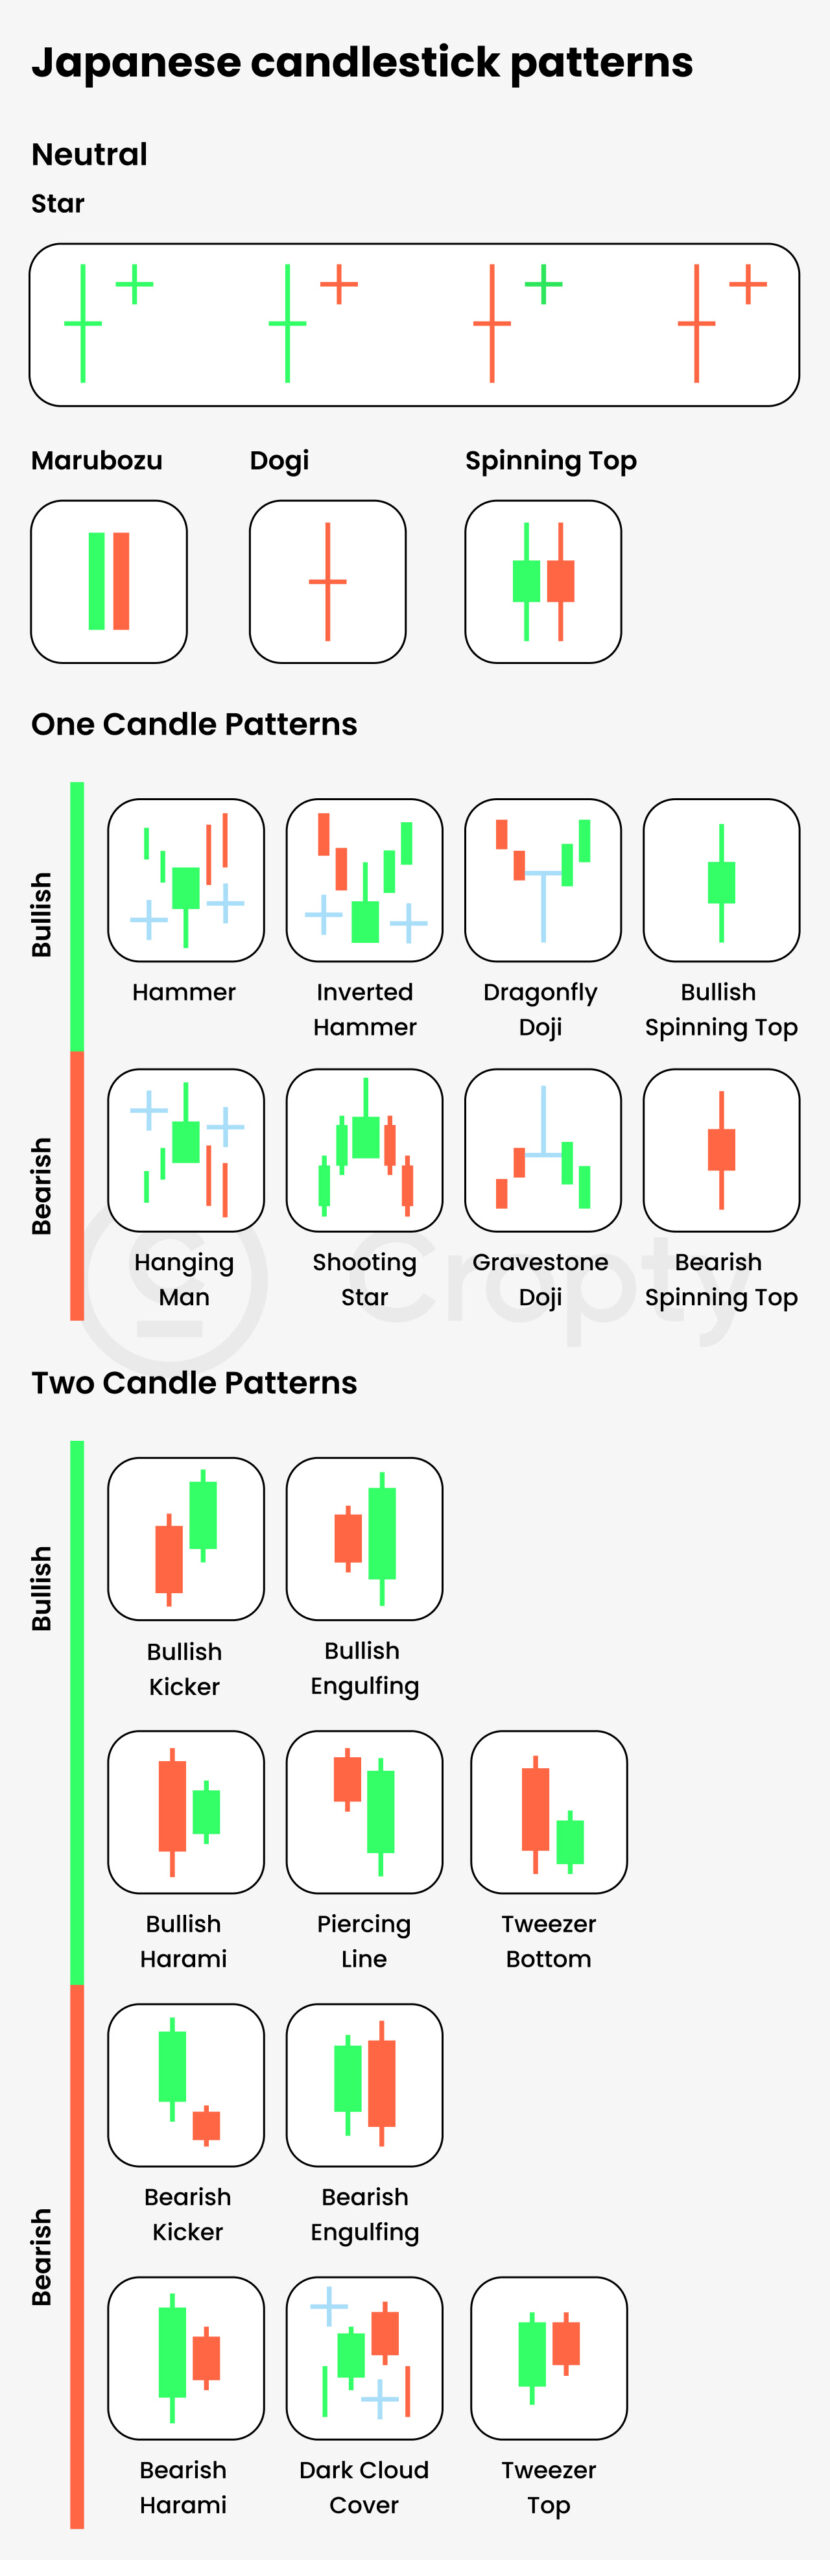 Japanese candlestick patterns